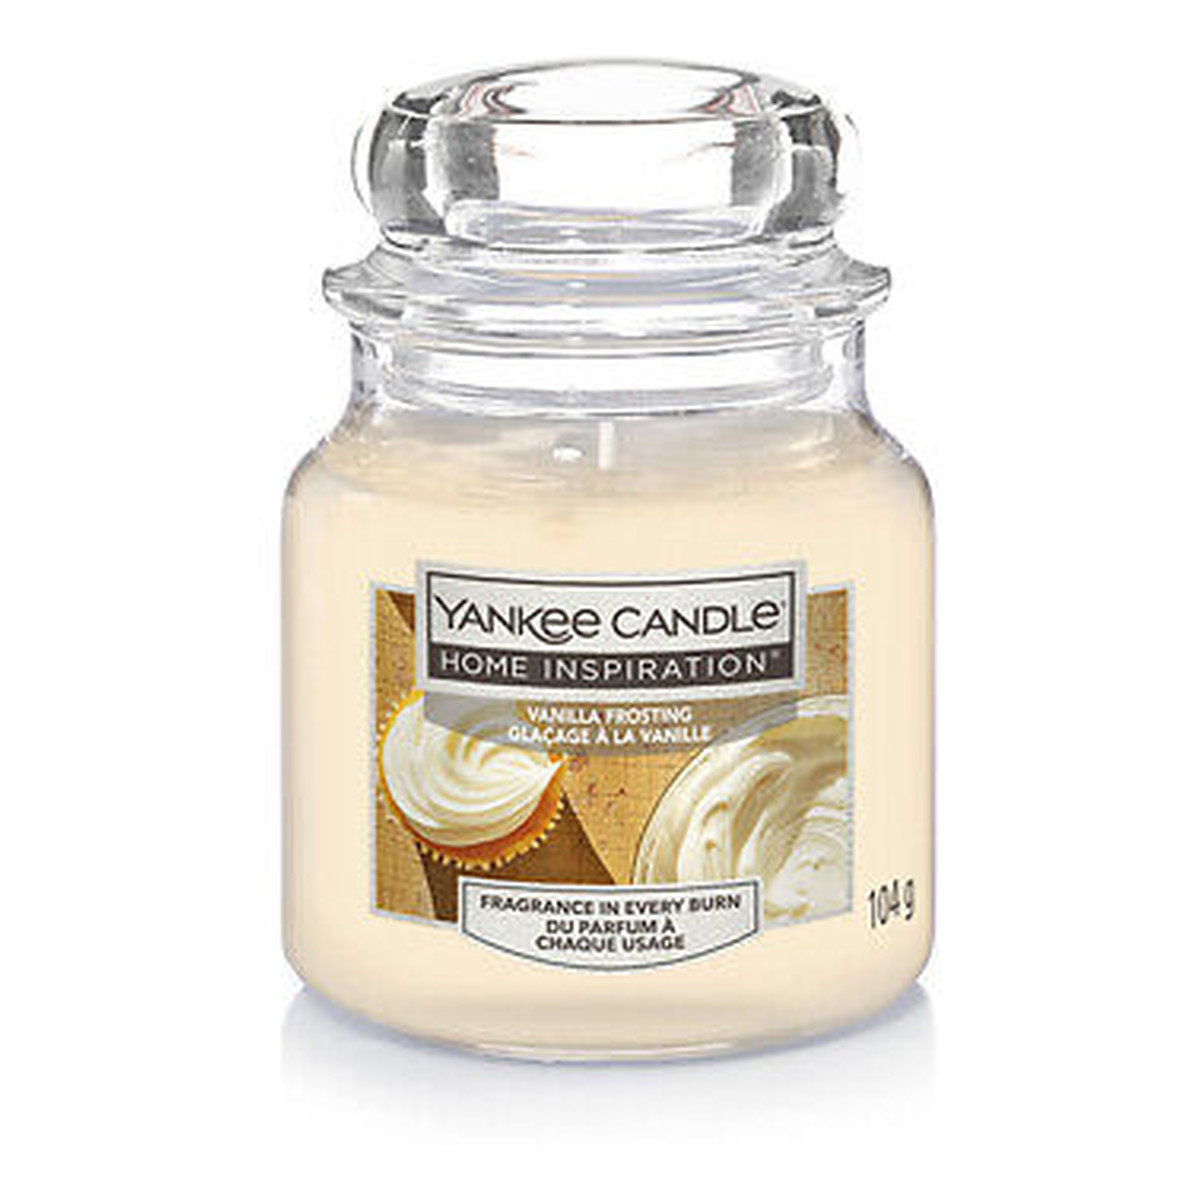 Yankee Candle Home Inspiration Świeca Zapachowa Vanilla Frosting 104g